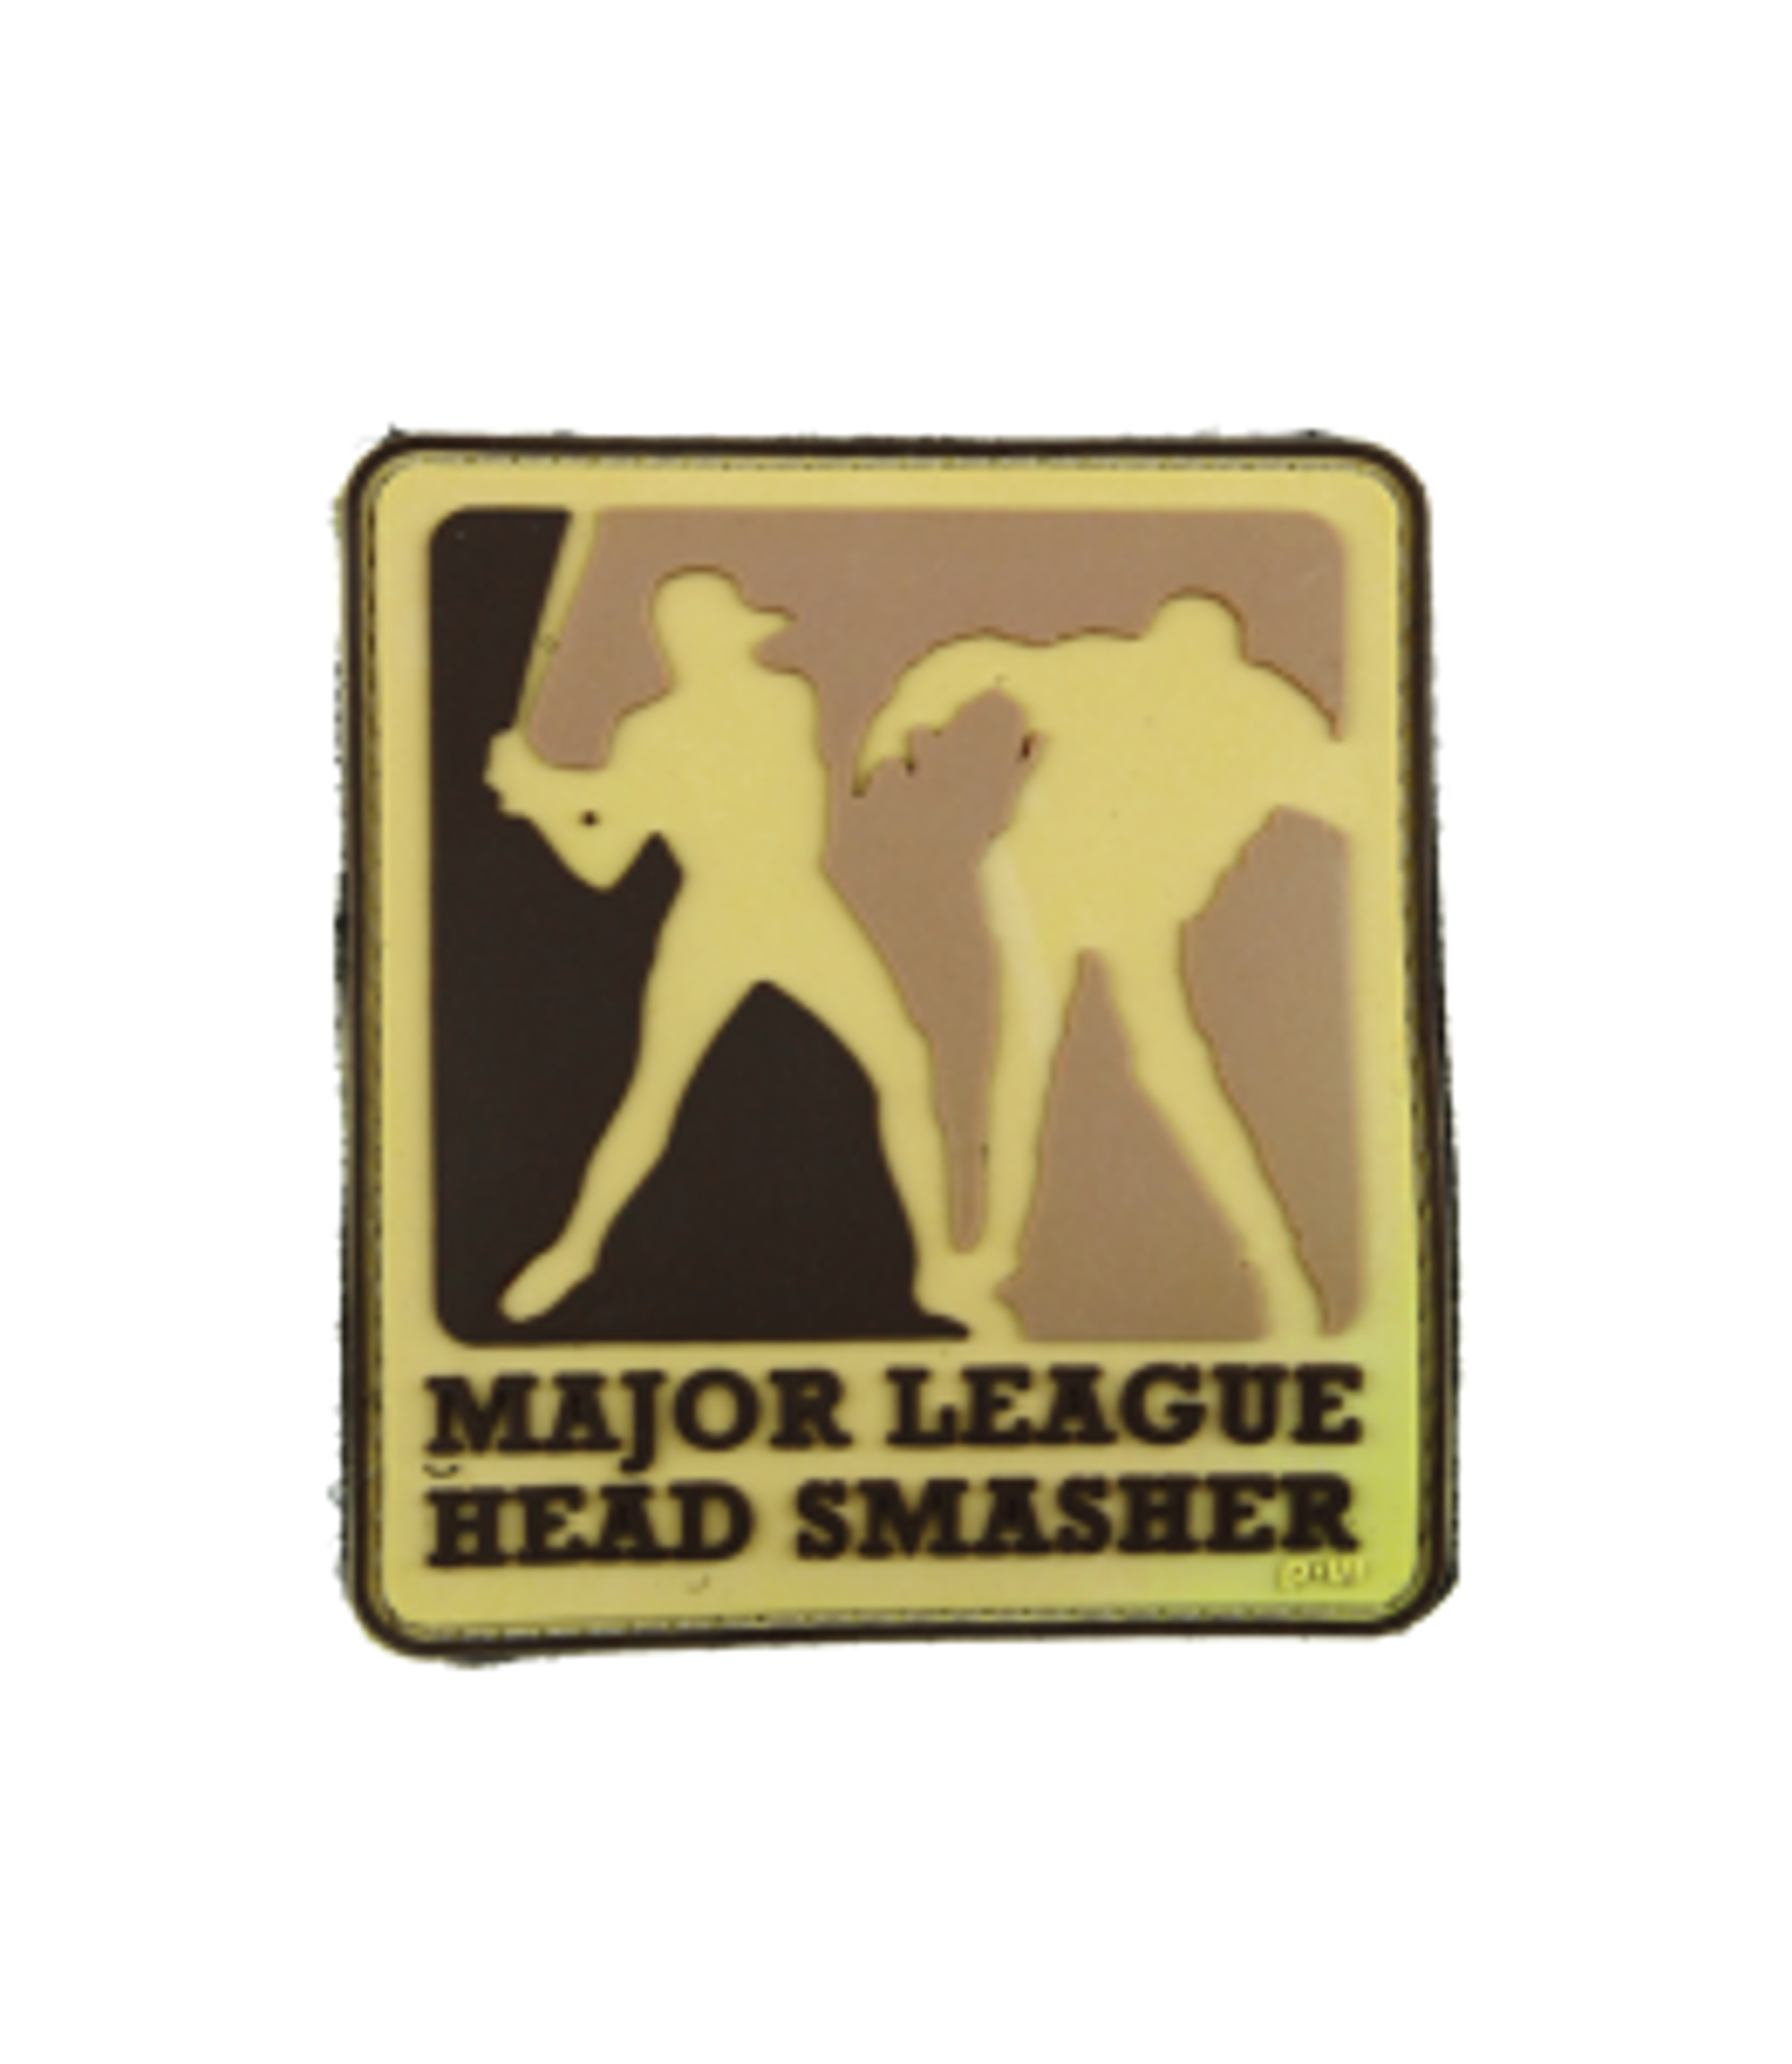 Major League Head Smasher - Tan - Morale Patch